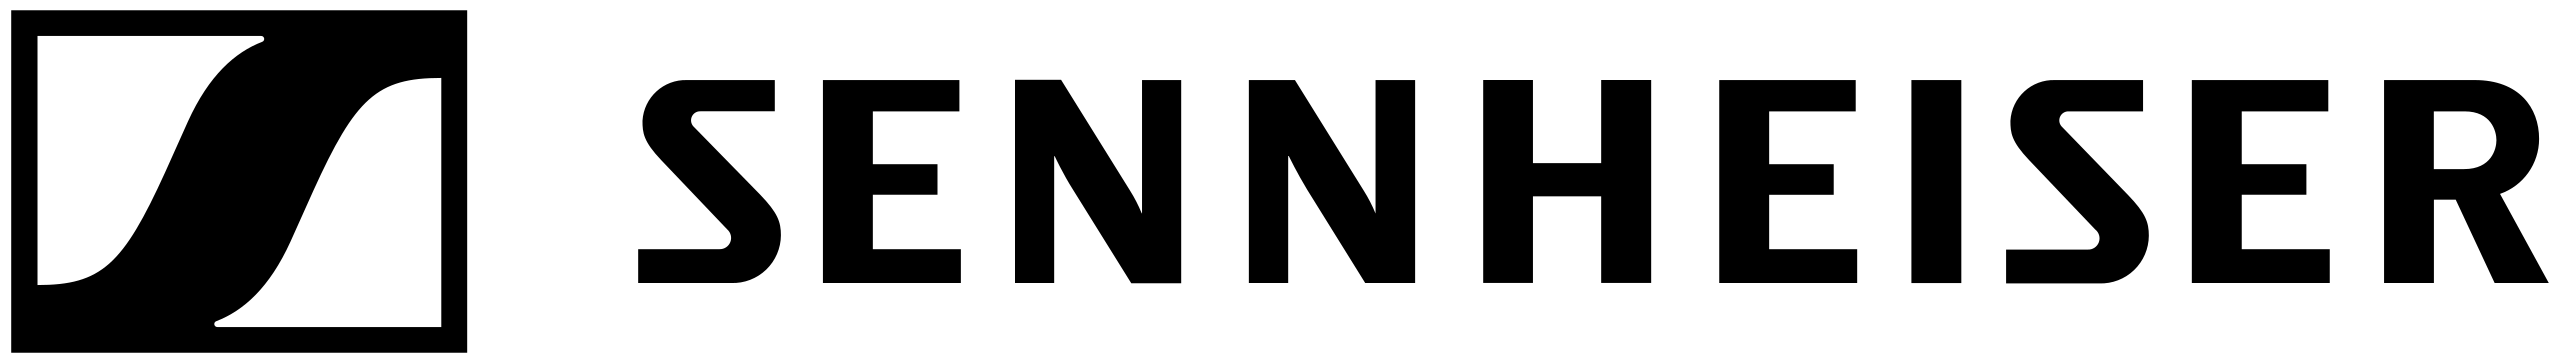 2560px-Sennheiser_logo.svg